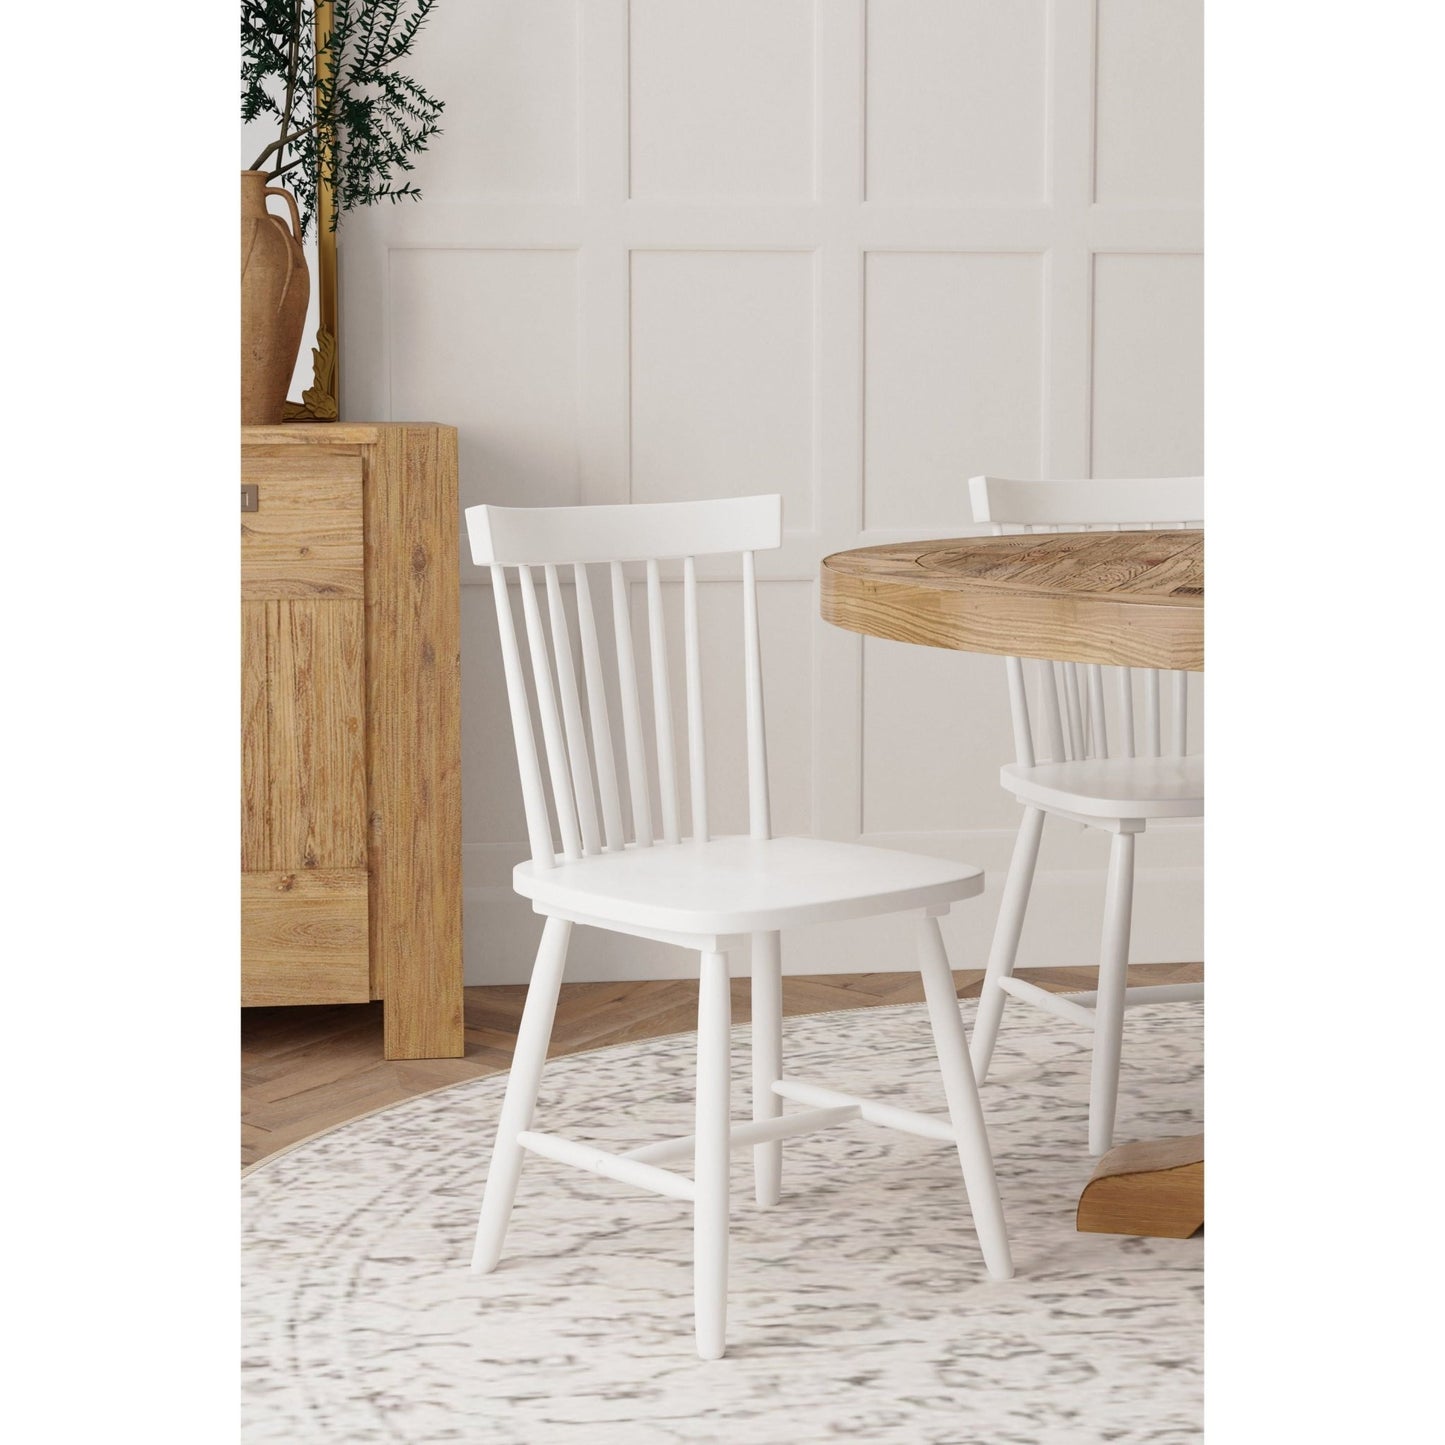 Lyra Set of 2 Windsor Chairs, White - Alpine Furniture